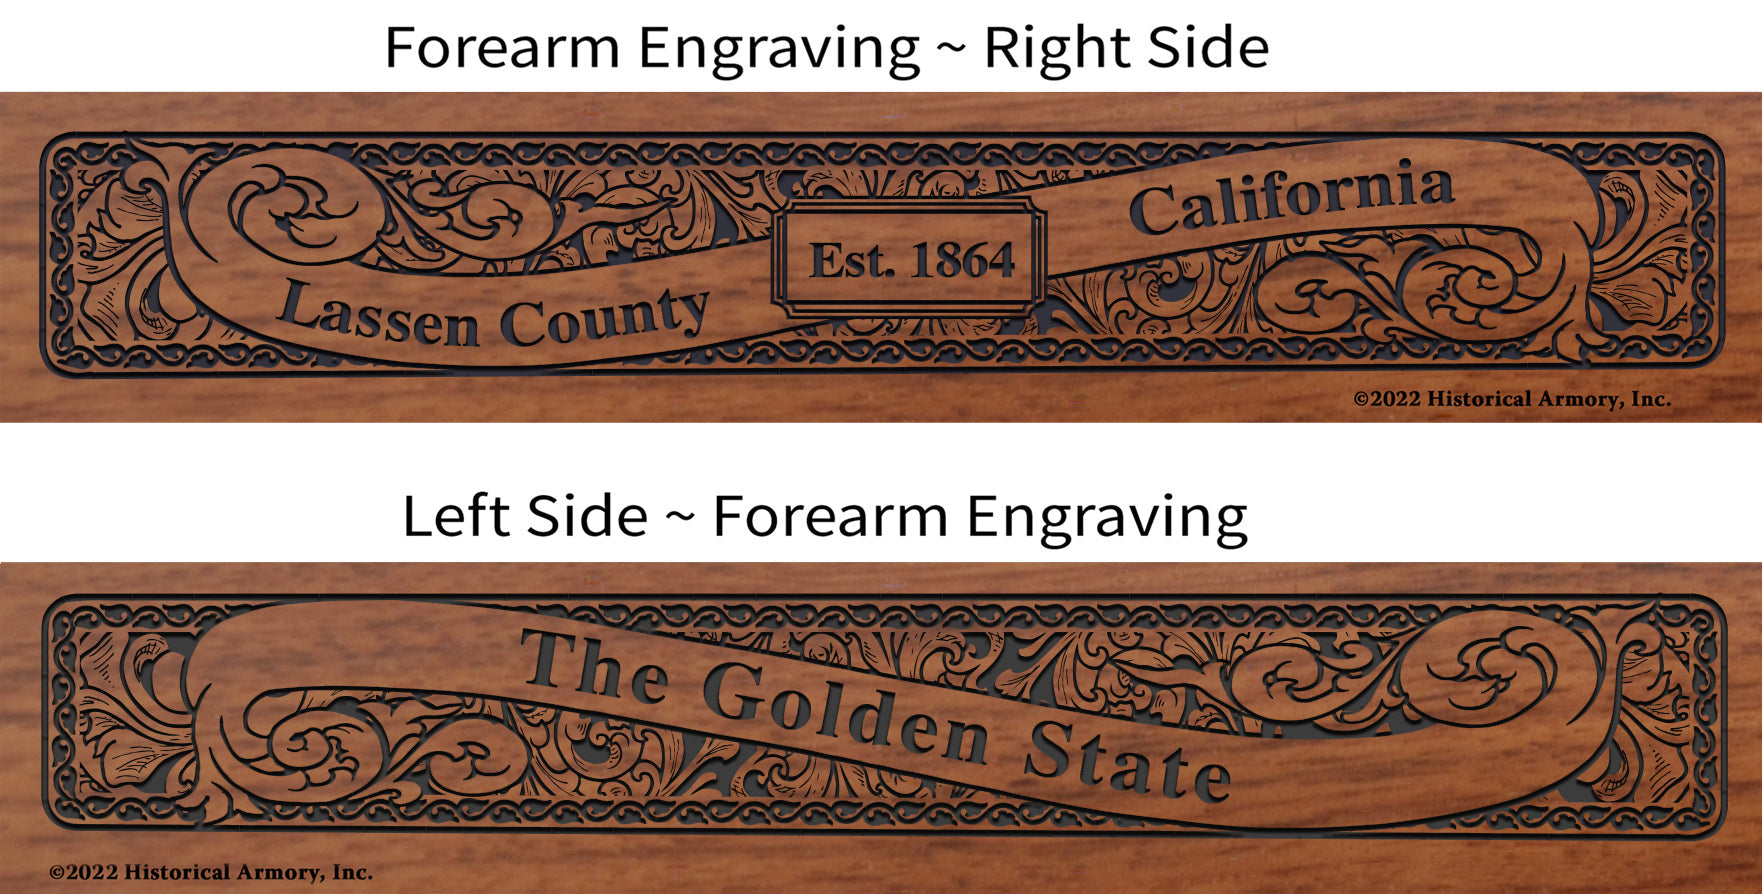 Lassen County California Engraved Rifle Forearm